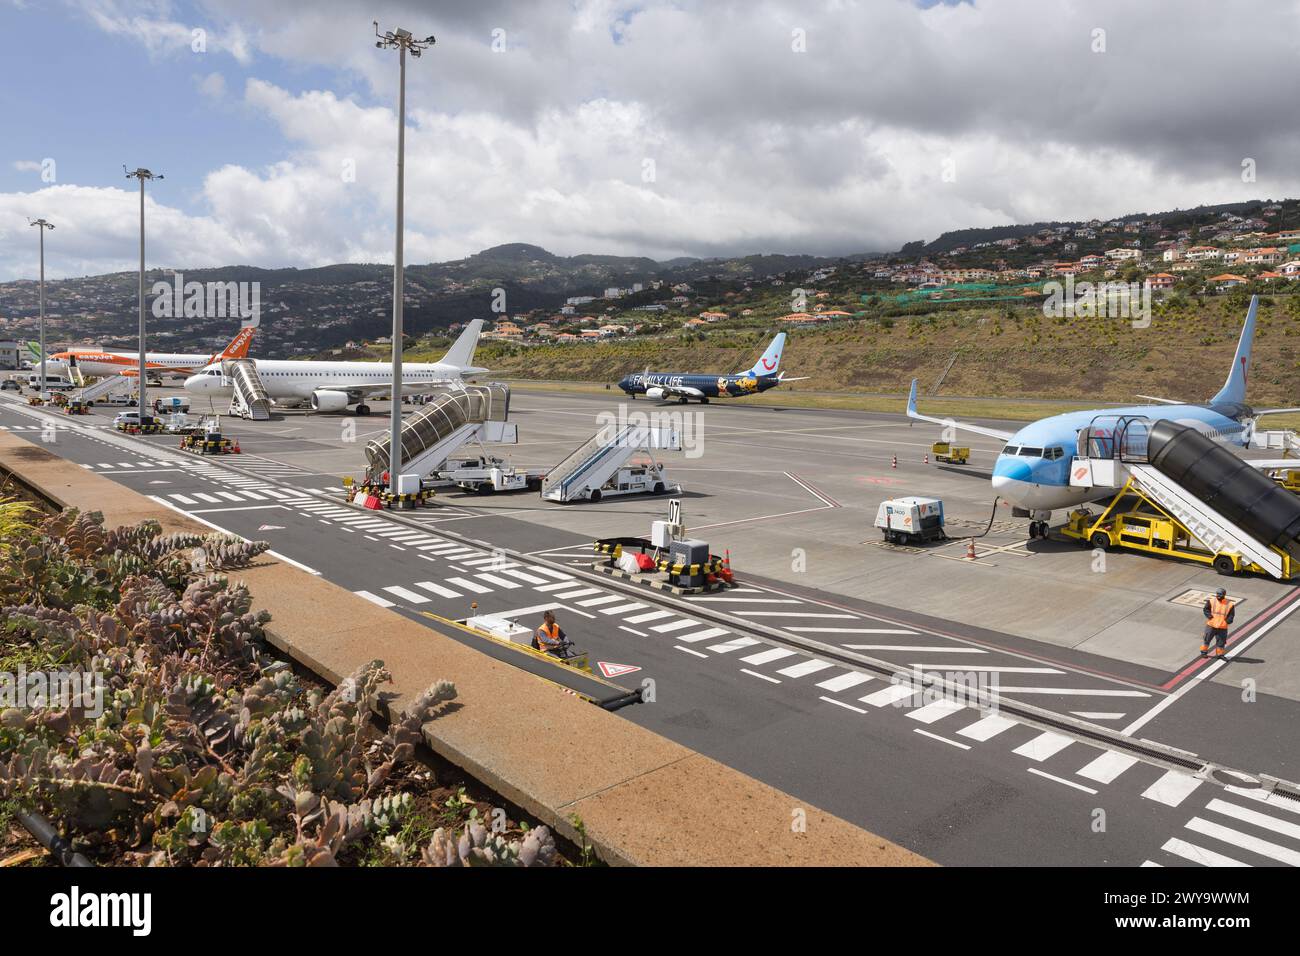 Aircraft aeroplanes parked at Cristiano Ronaldo International Airport, Funchal, Madeira. Stock Photo